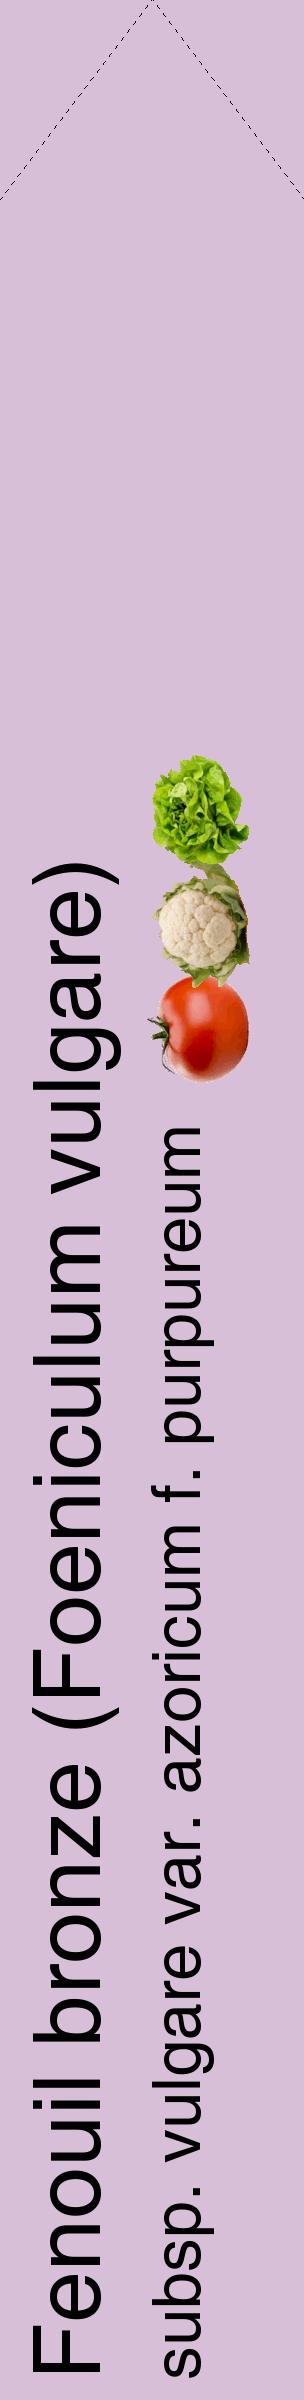 Étiquette de : Foeniculum vulgare subsp. vulgare var. azoricum f. purpureum - format c - style noire54_simplehel avec comestibilité simplifiée